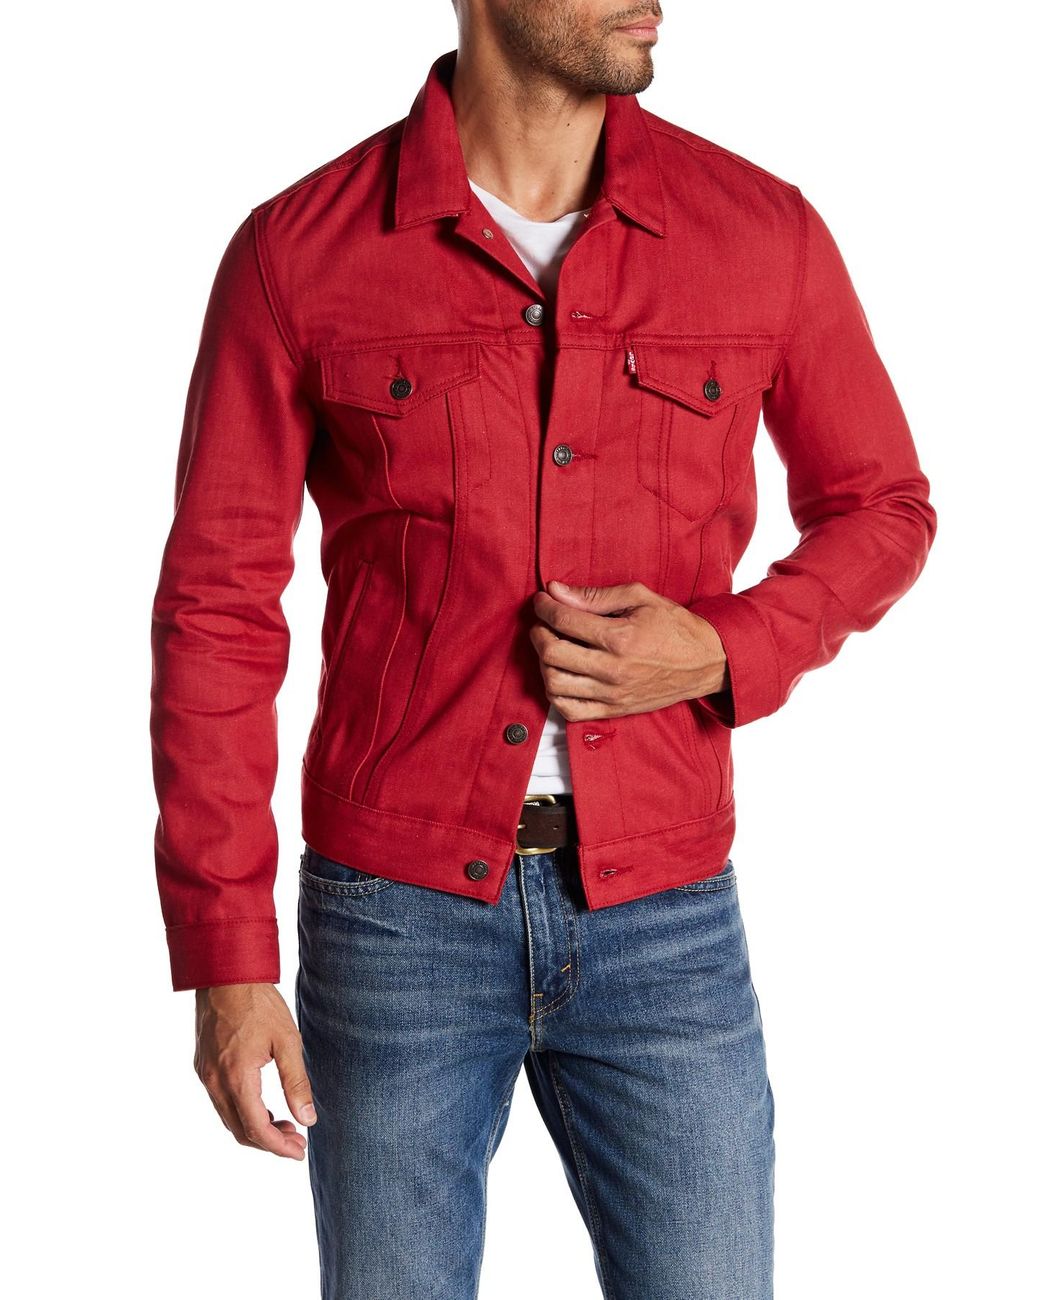 Top 75+ imagen levi’s red jeans jacket